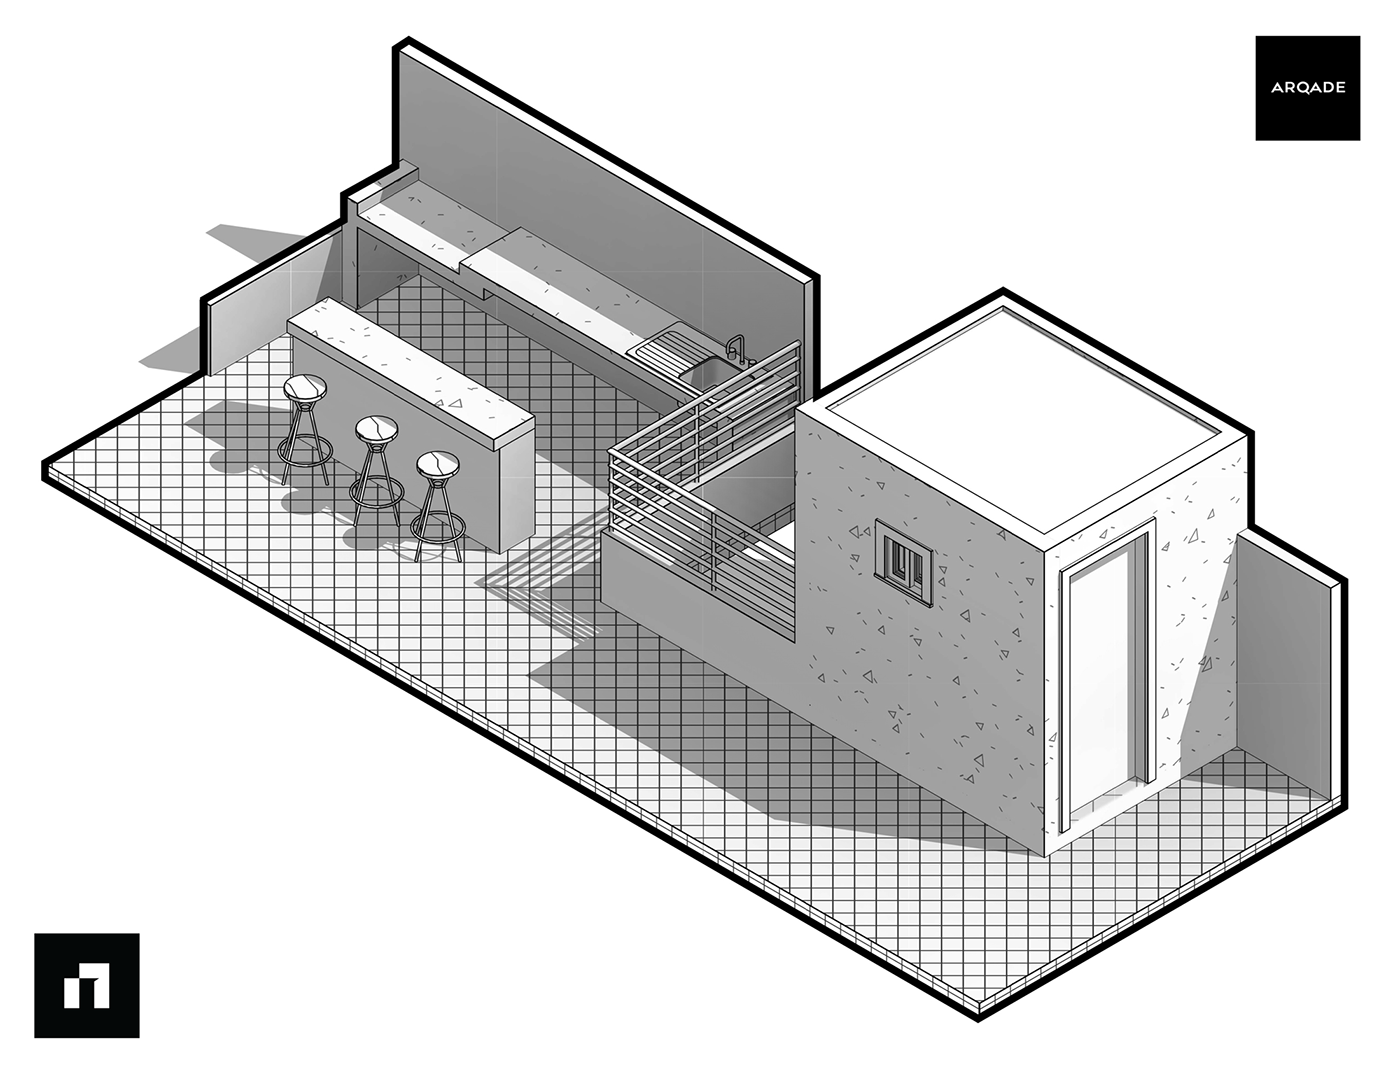 axonometric axonometry Isometric isometric illustration architecture design archviz roof roofgarden HOUSE DESIGN